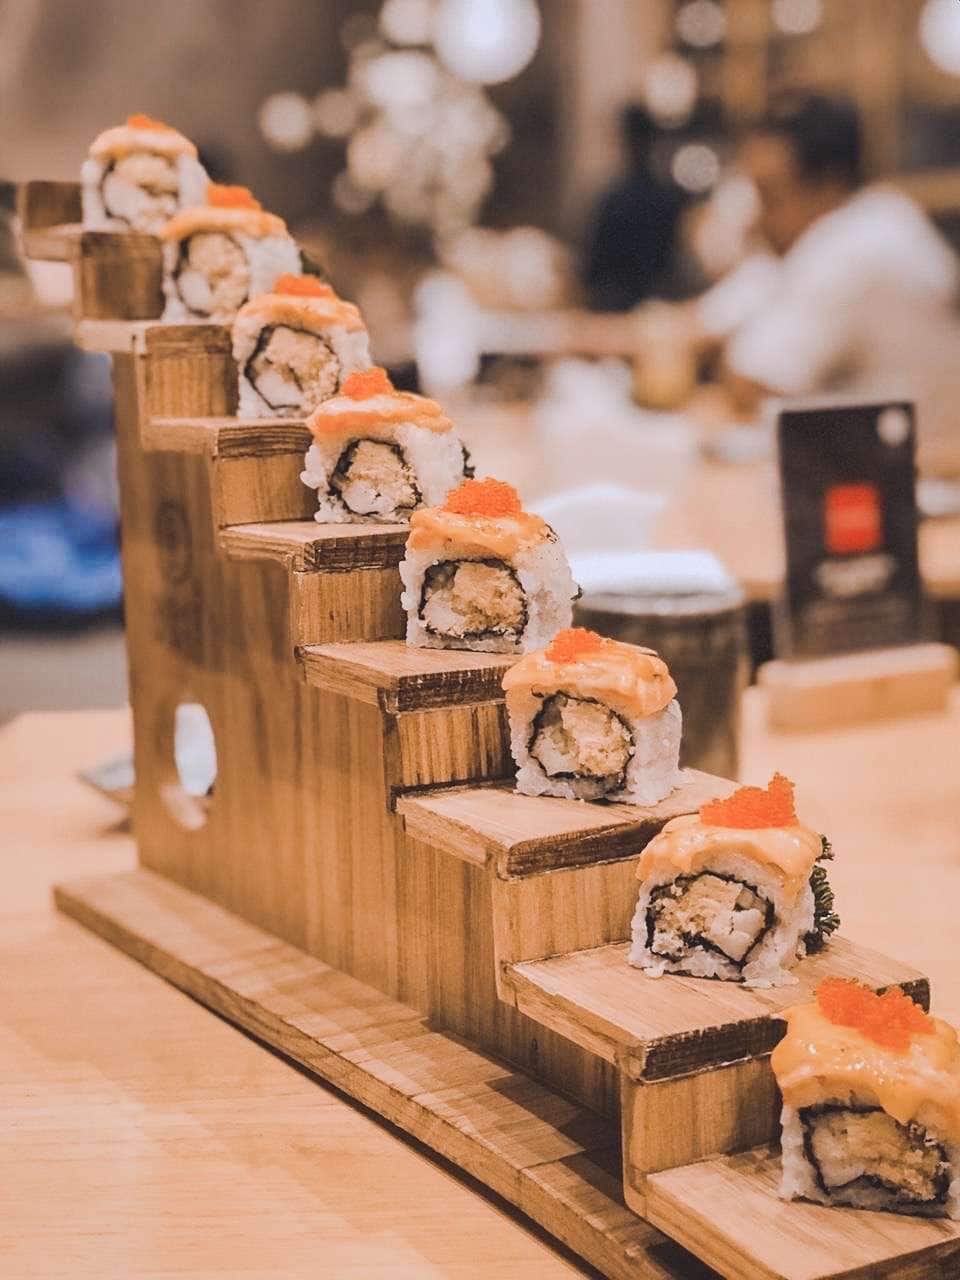 Sushi hiro surabaya